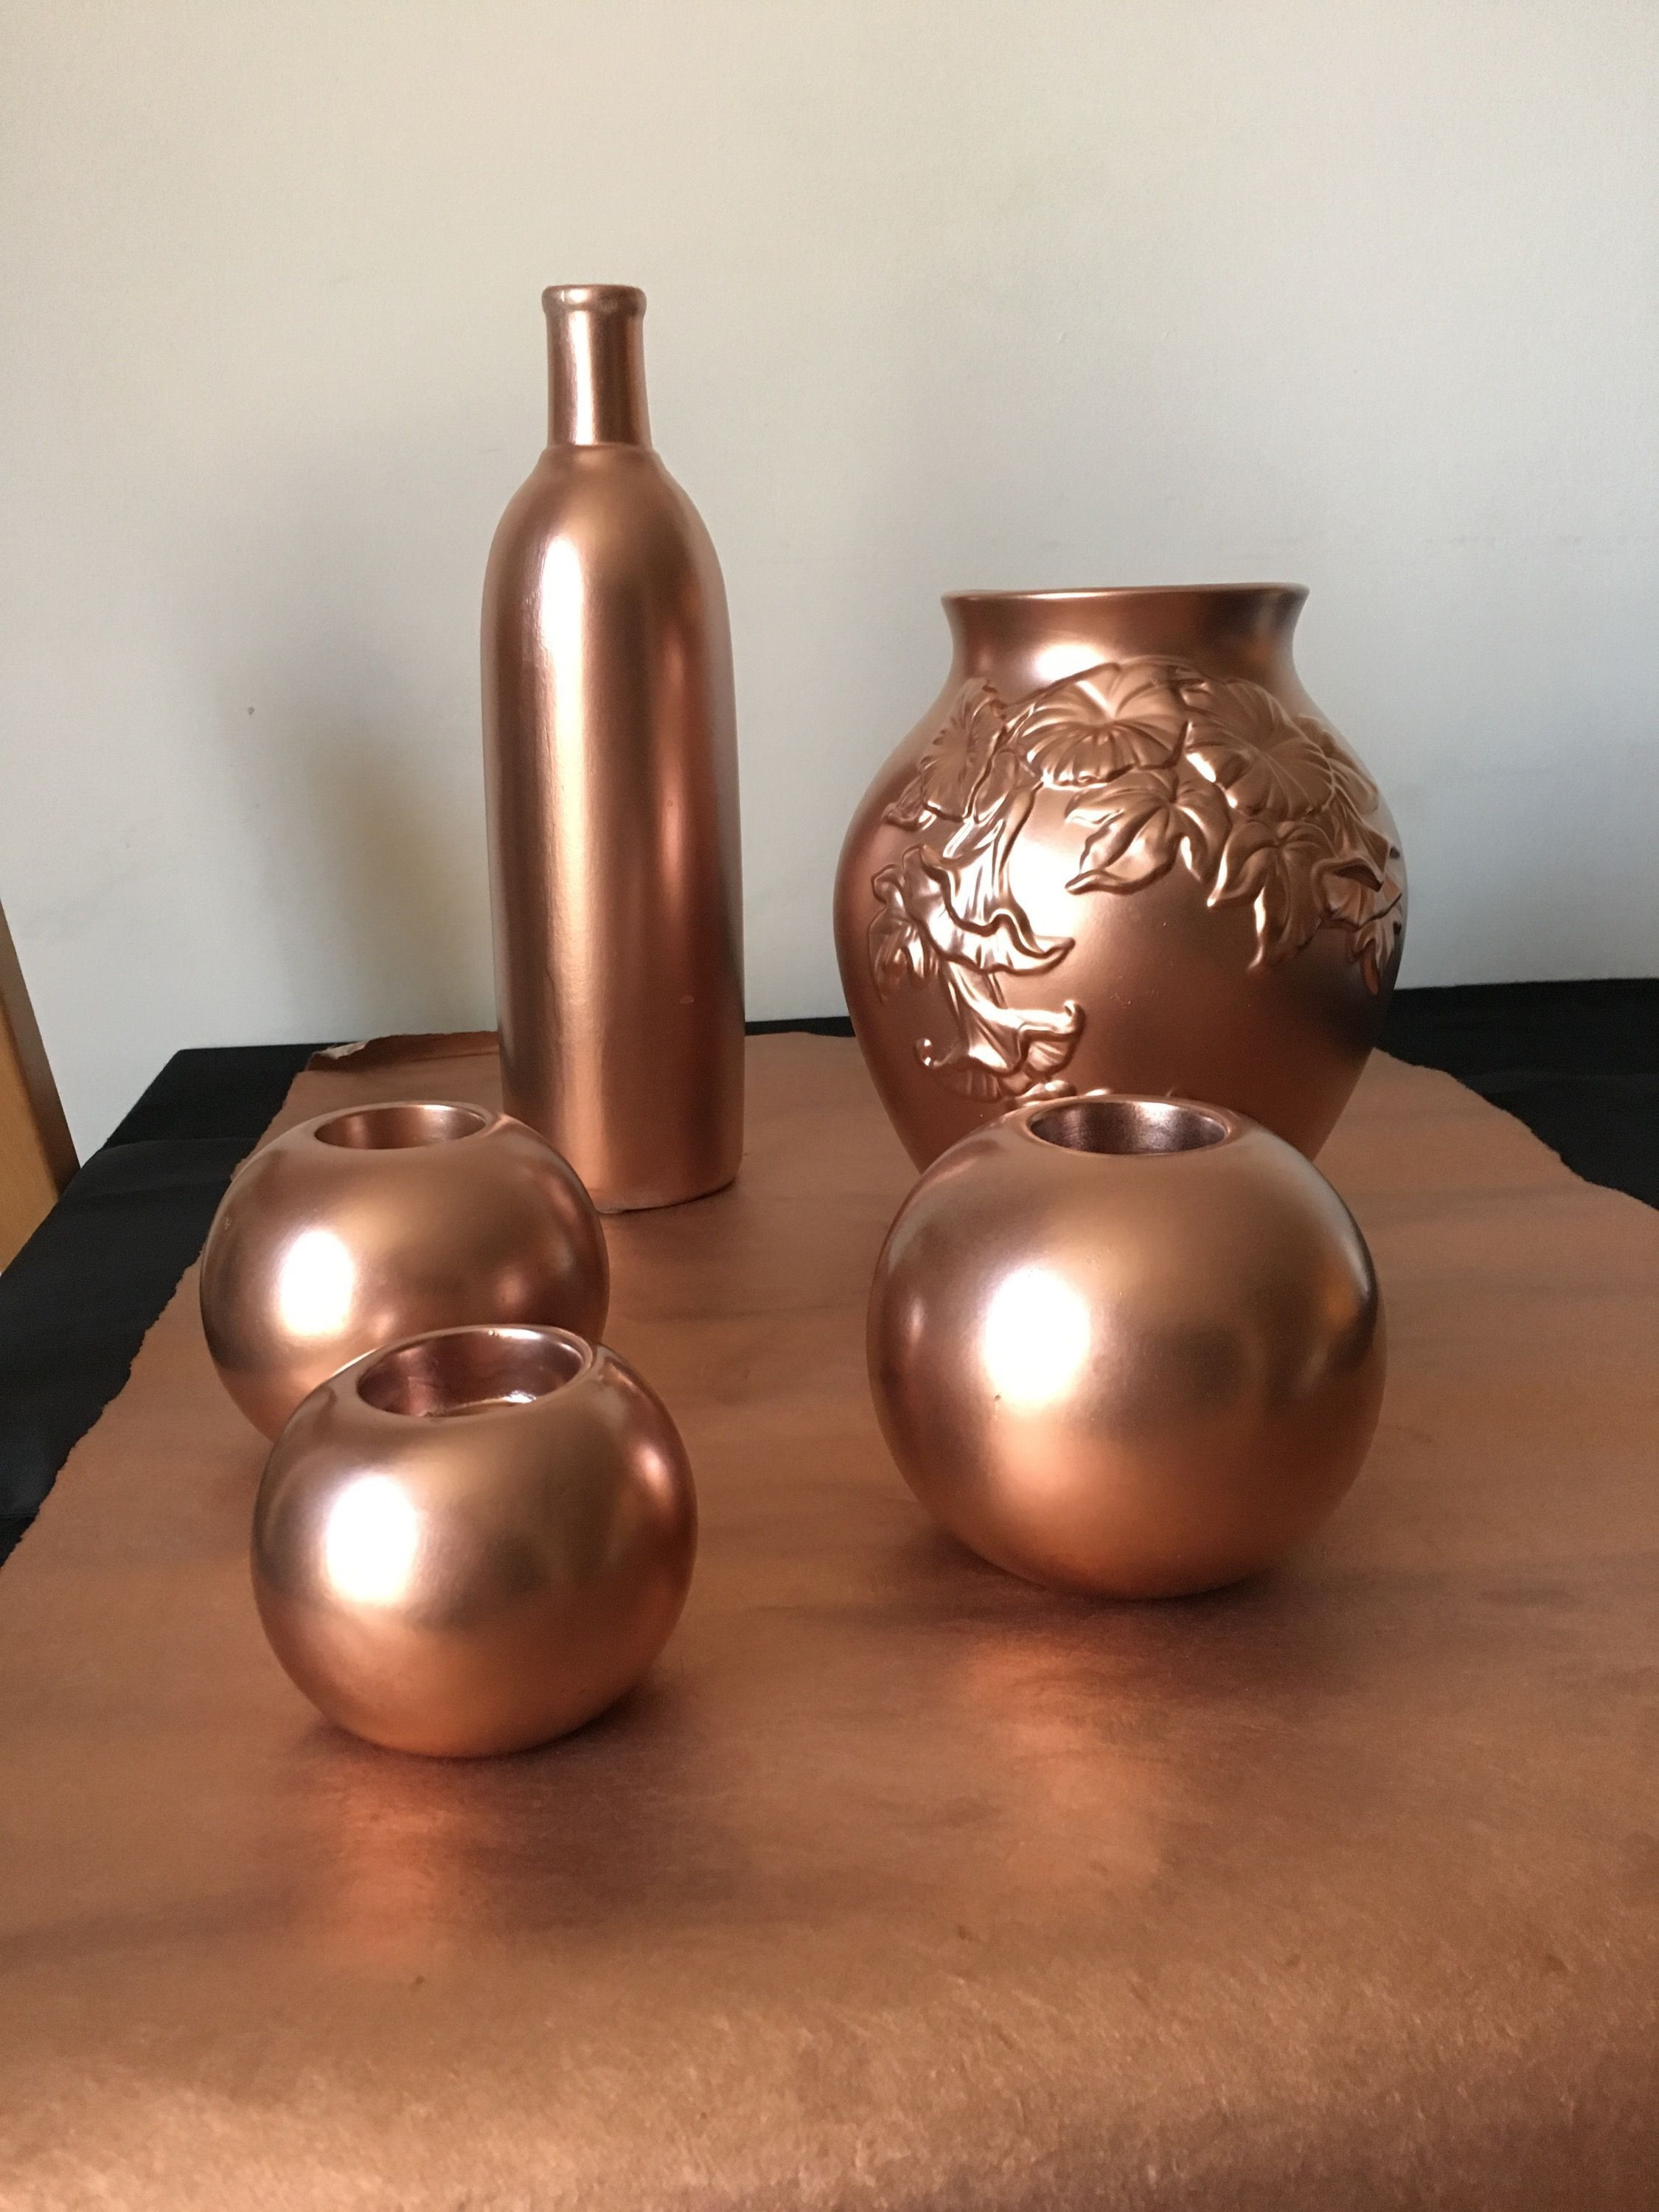 12 attractive Lenox Vases for Sale 2024 free download lenox vases for sale of 44 gold and silver vase the weekly world inside copper obsession bedroom pinterest